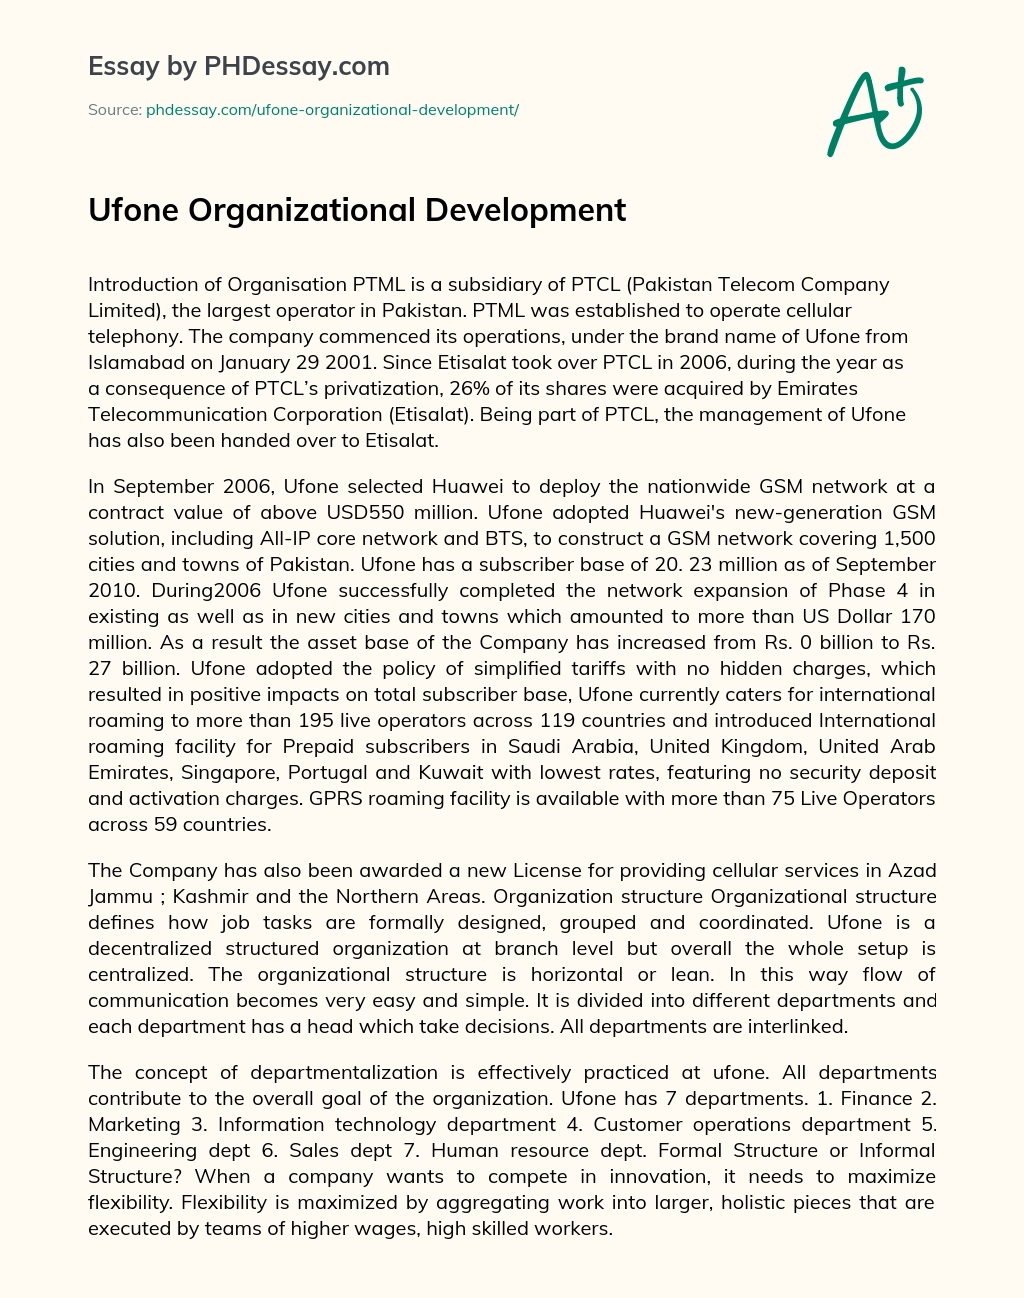 Ufone Organizational Development essay